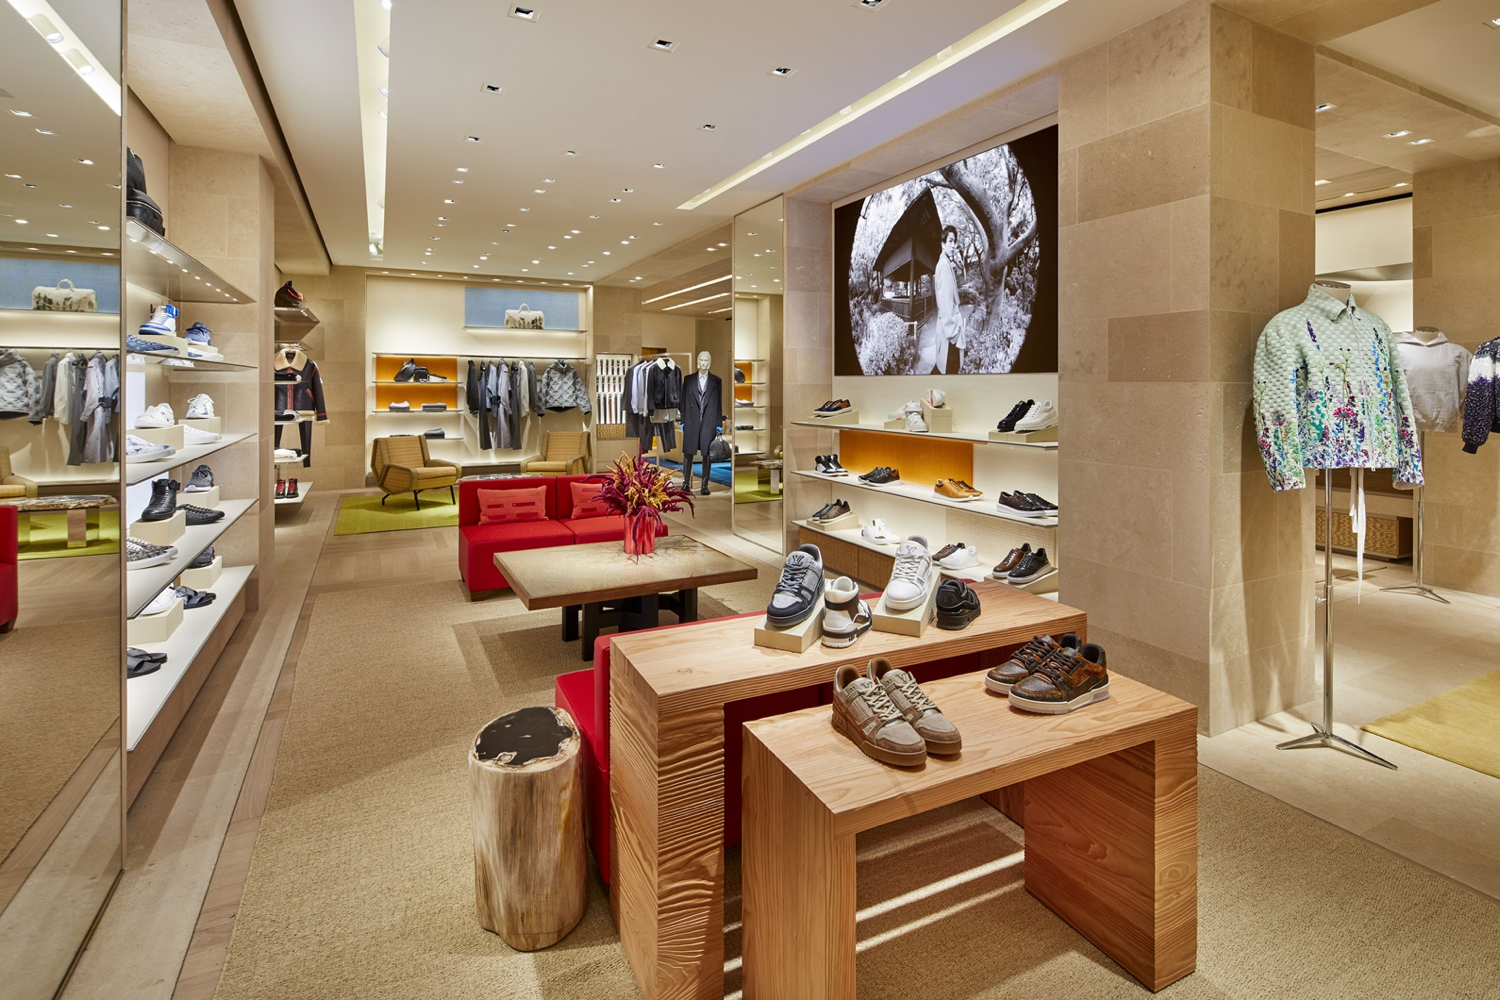 Louis Vuitton Maison  Shopping in Mayfair, London